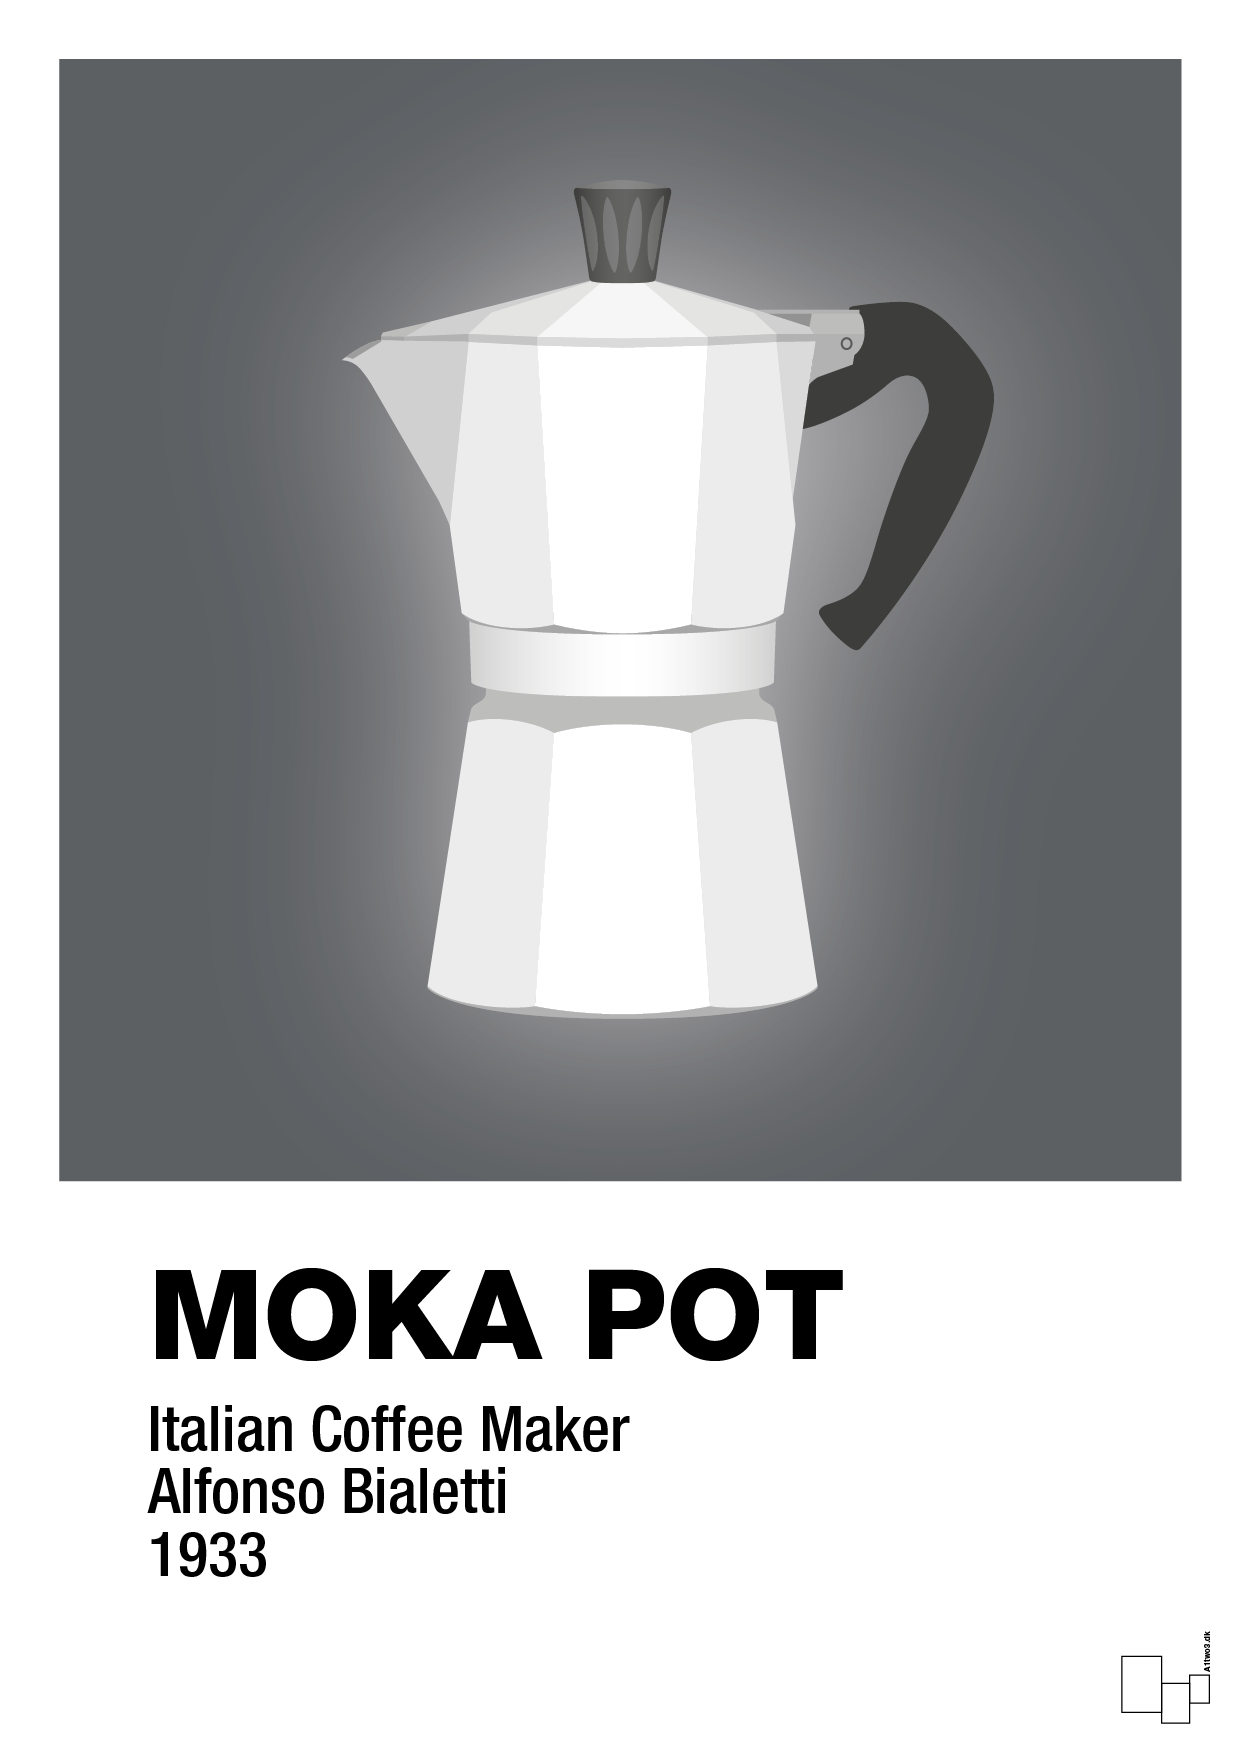 moka pot - Plakat med Mad & Drikke i Graphic Charcoal